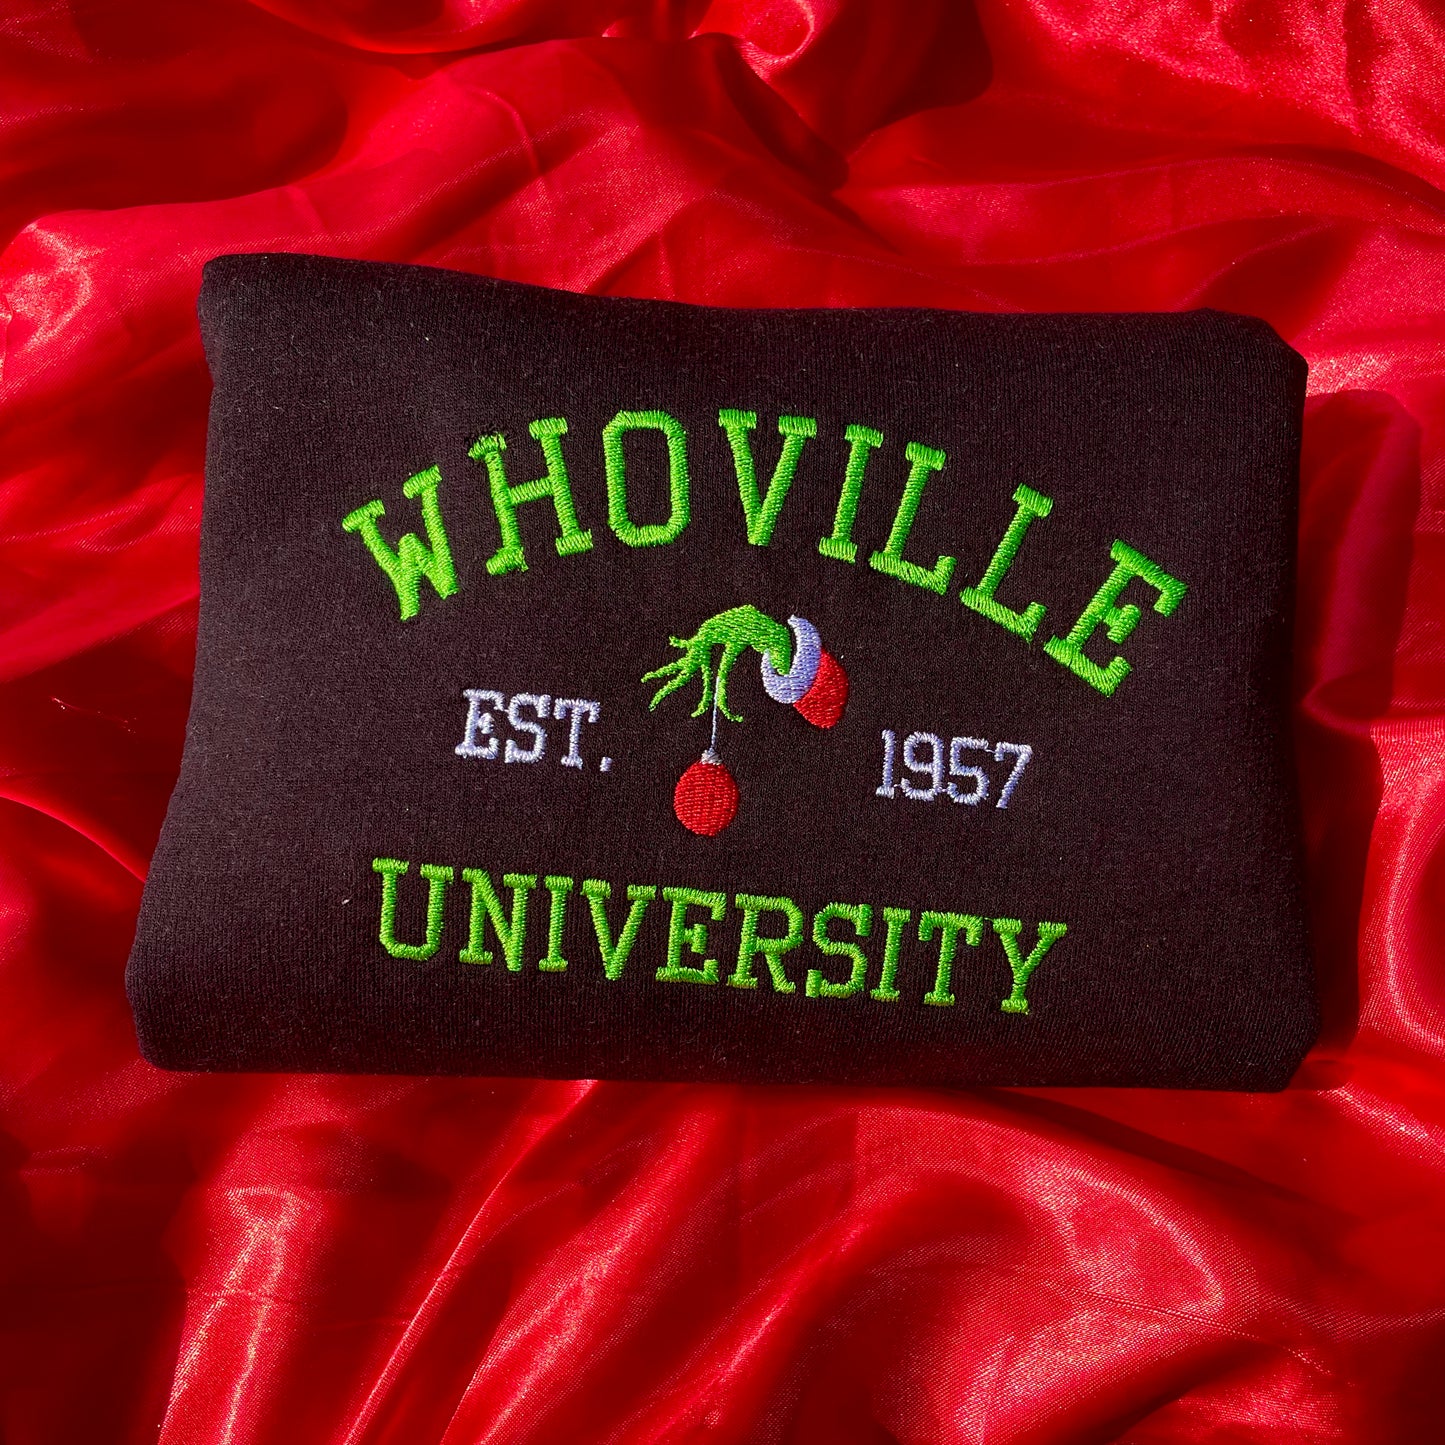 Whovill University Sweatshirt/Hoodie